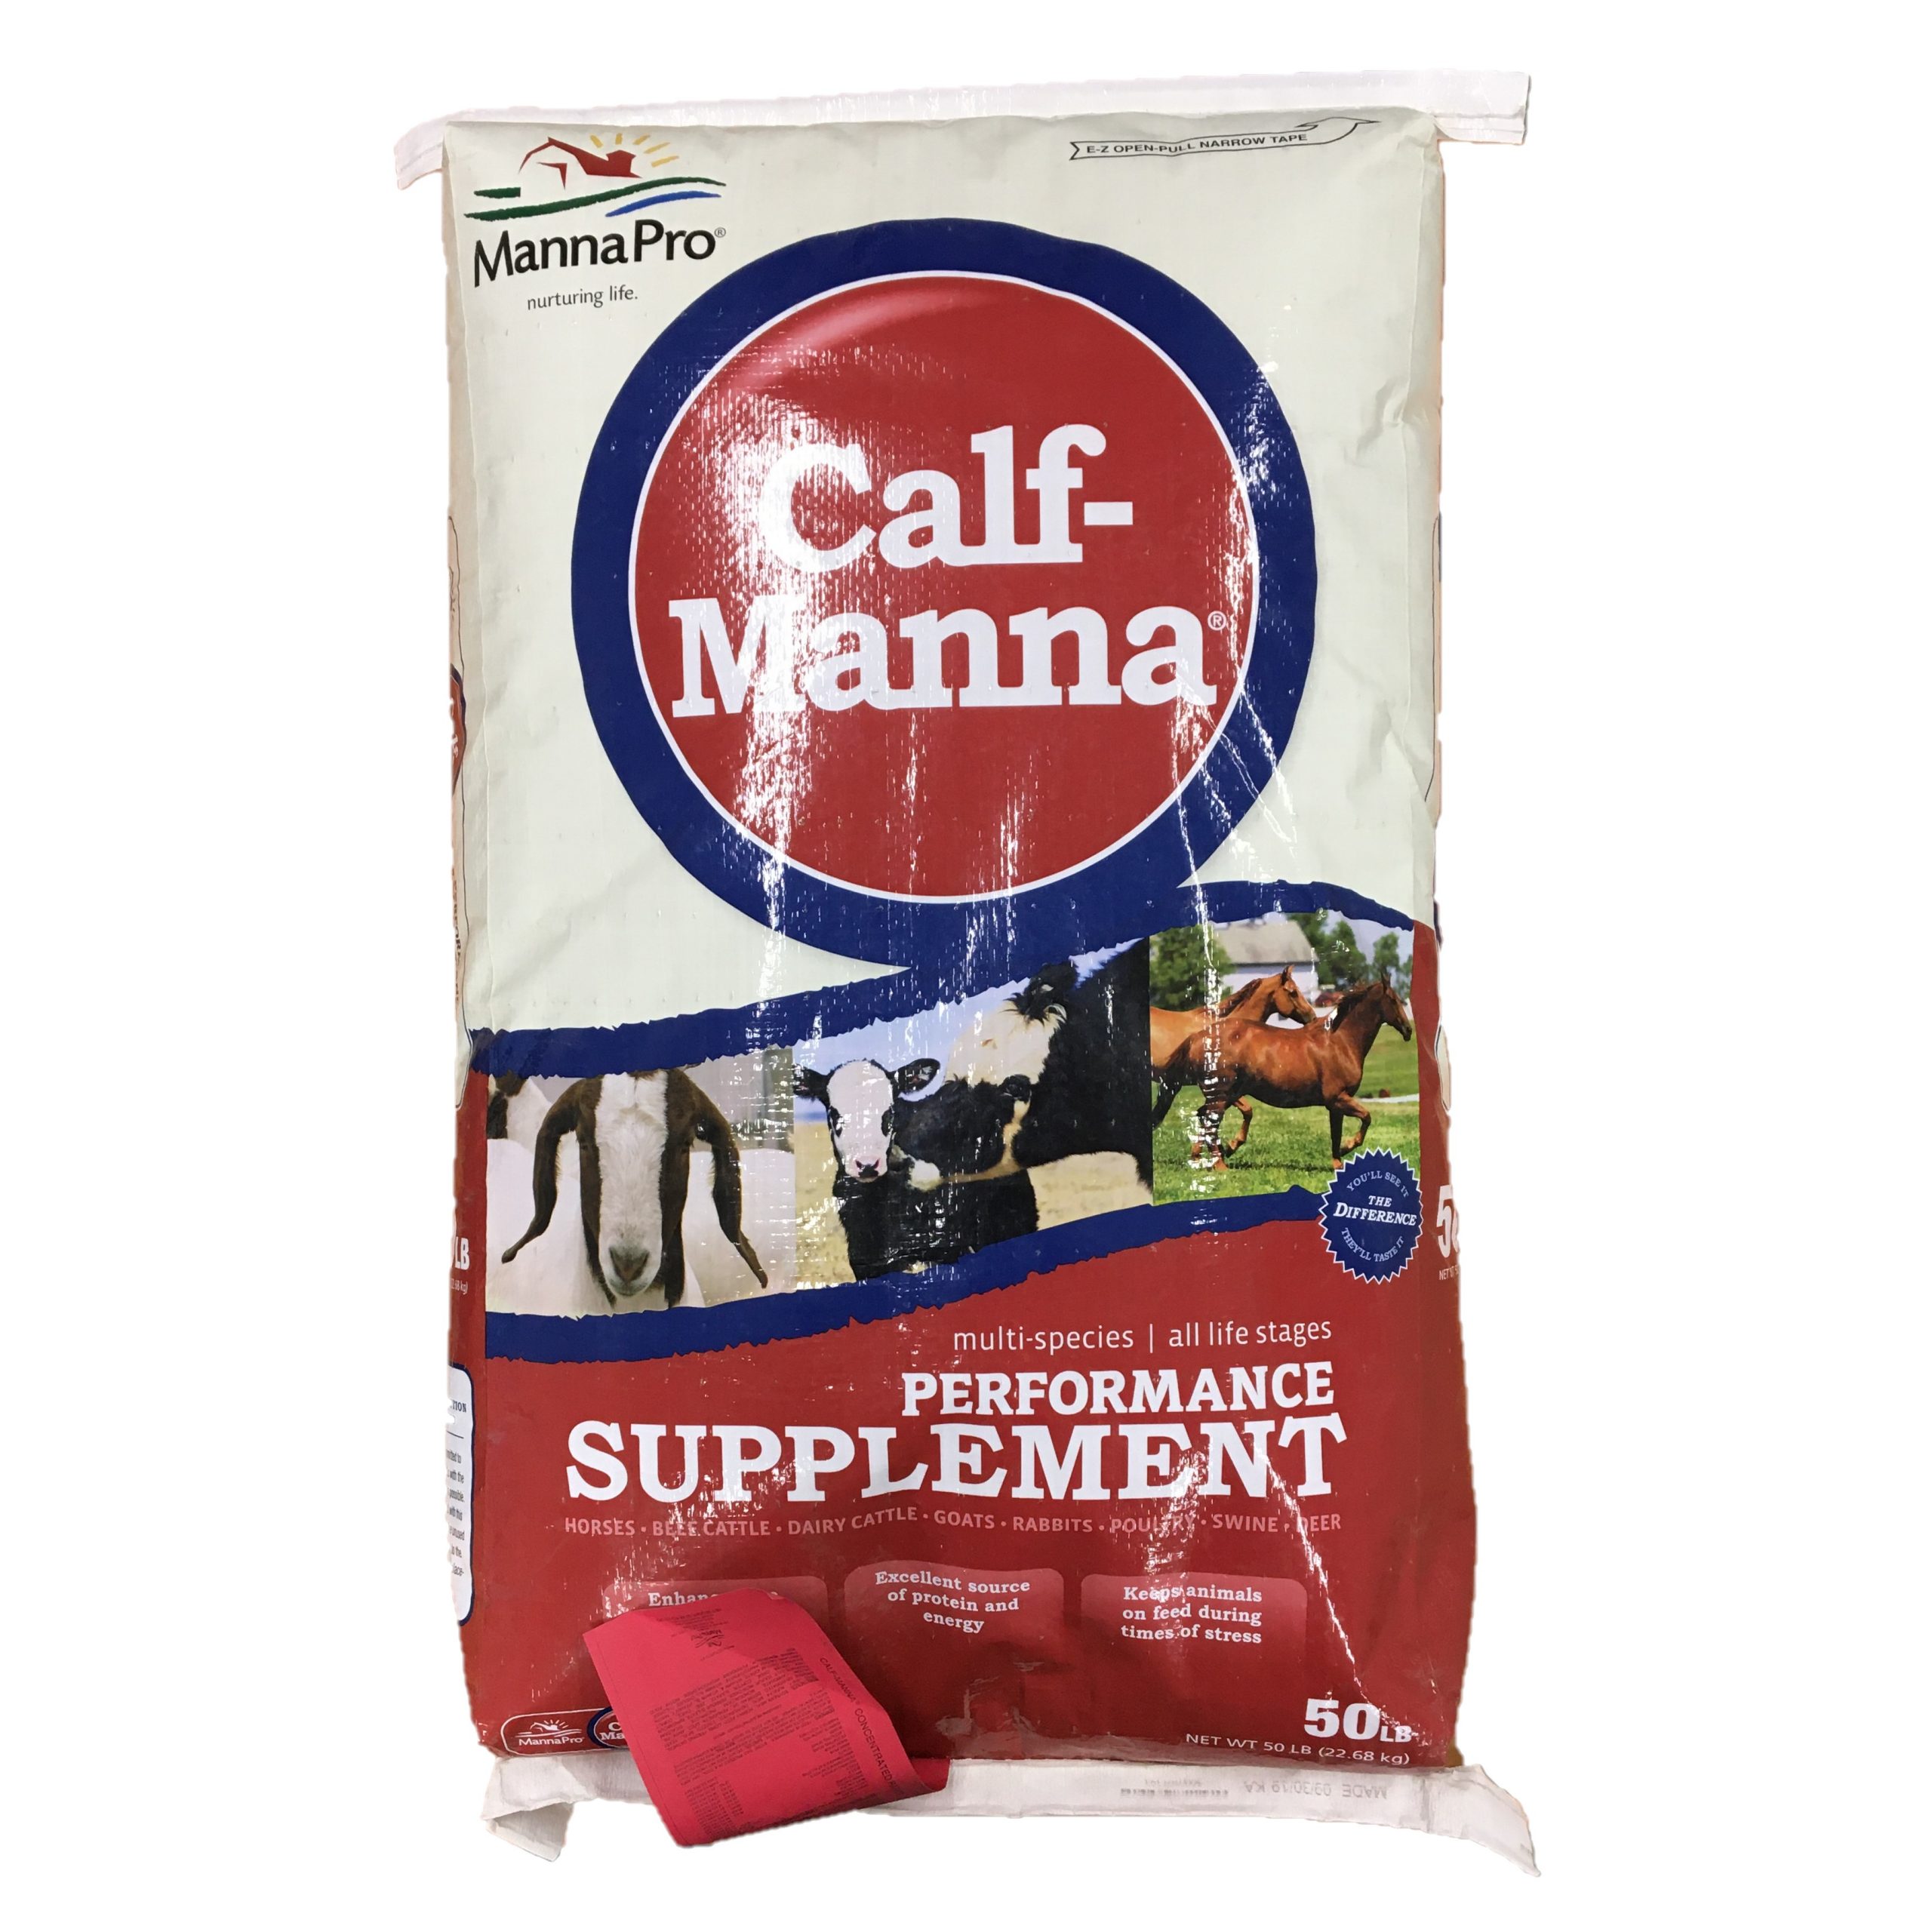 Calf-Manna